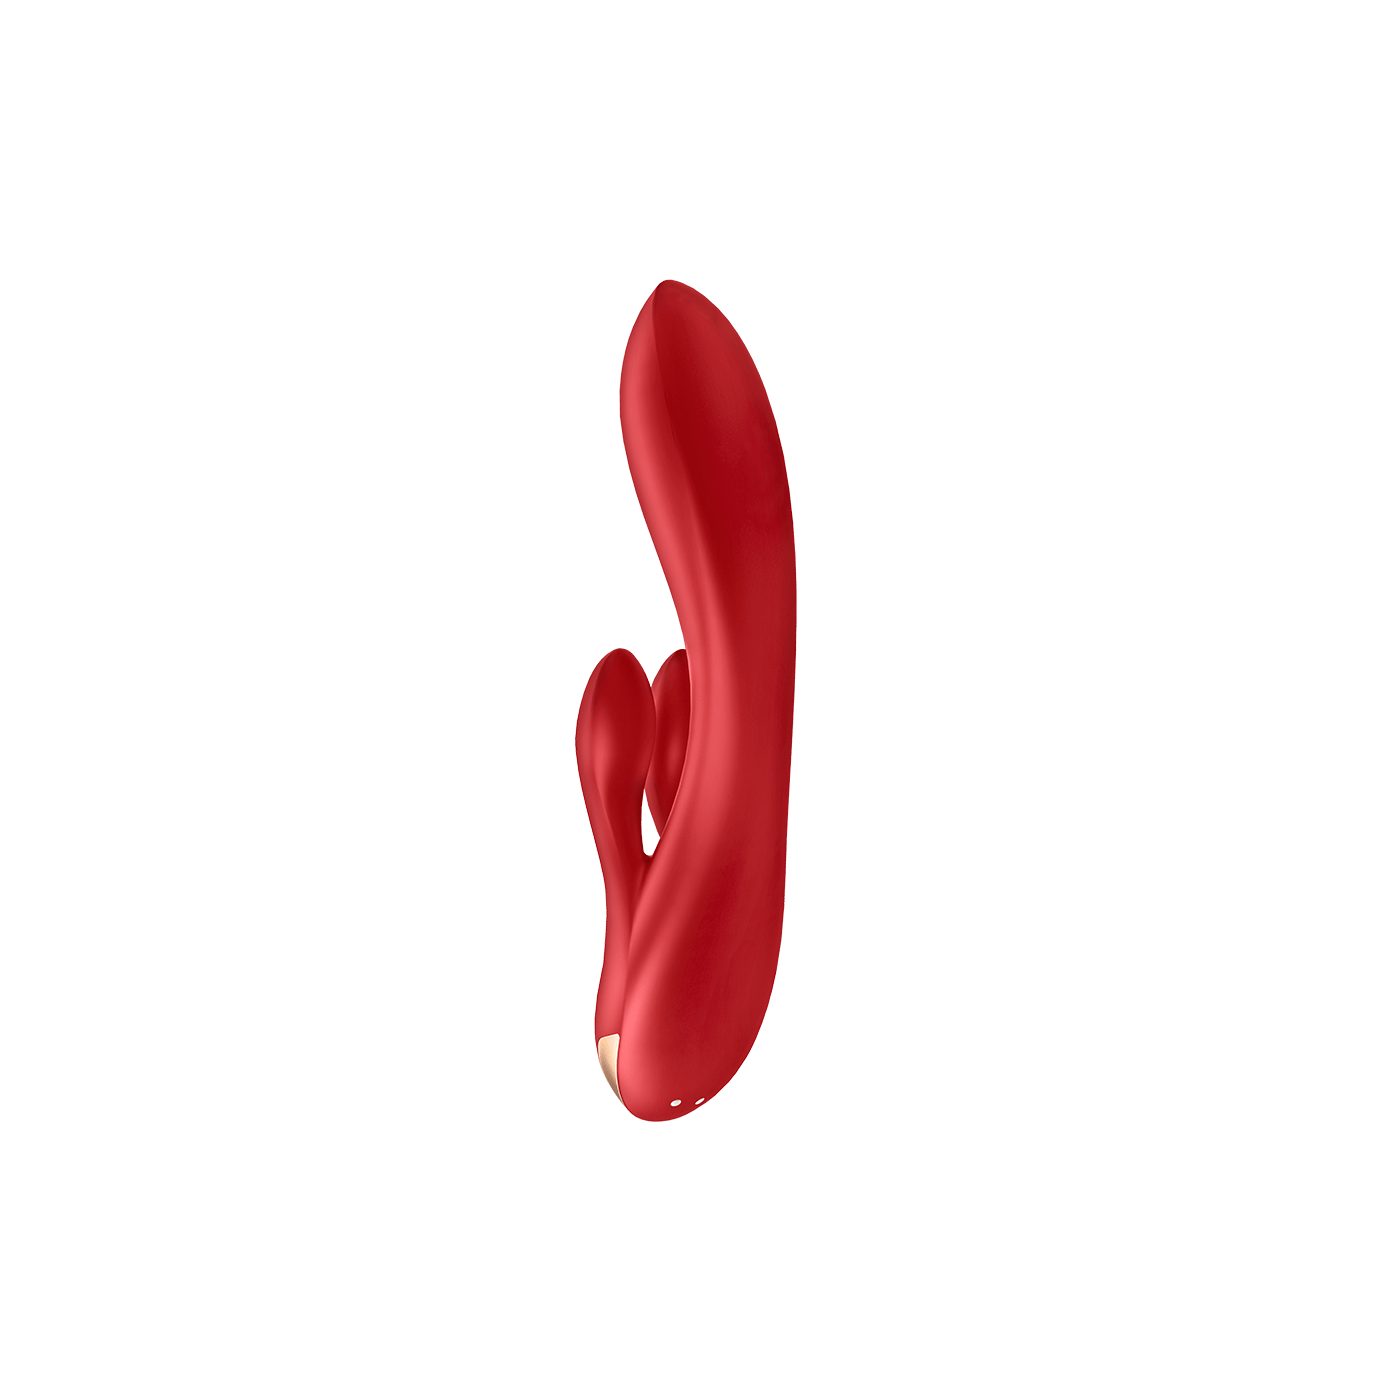 Rabbit, 20cm Connect App", Klitoris-Stimulator "Double Satisfyer Bluetooth, Satisfyer Rot App, Flex mit